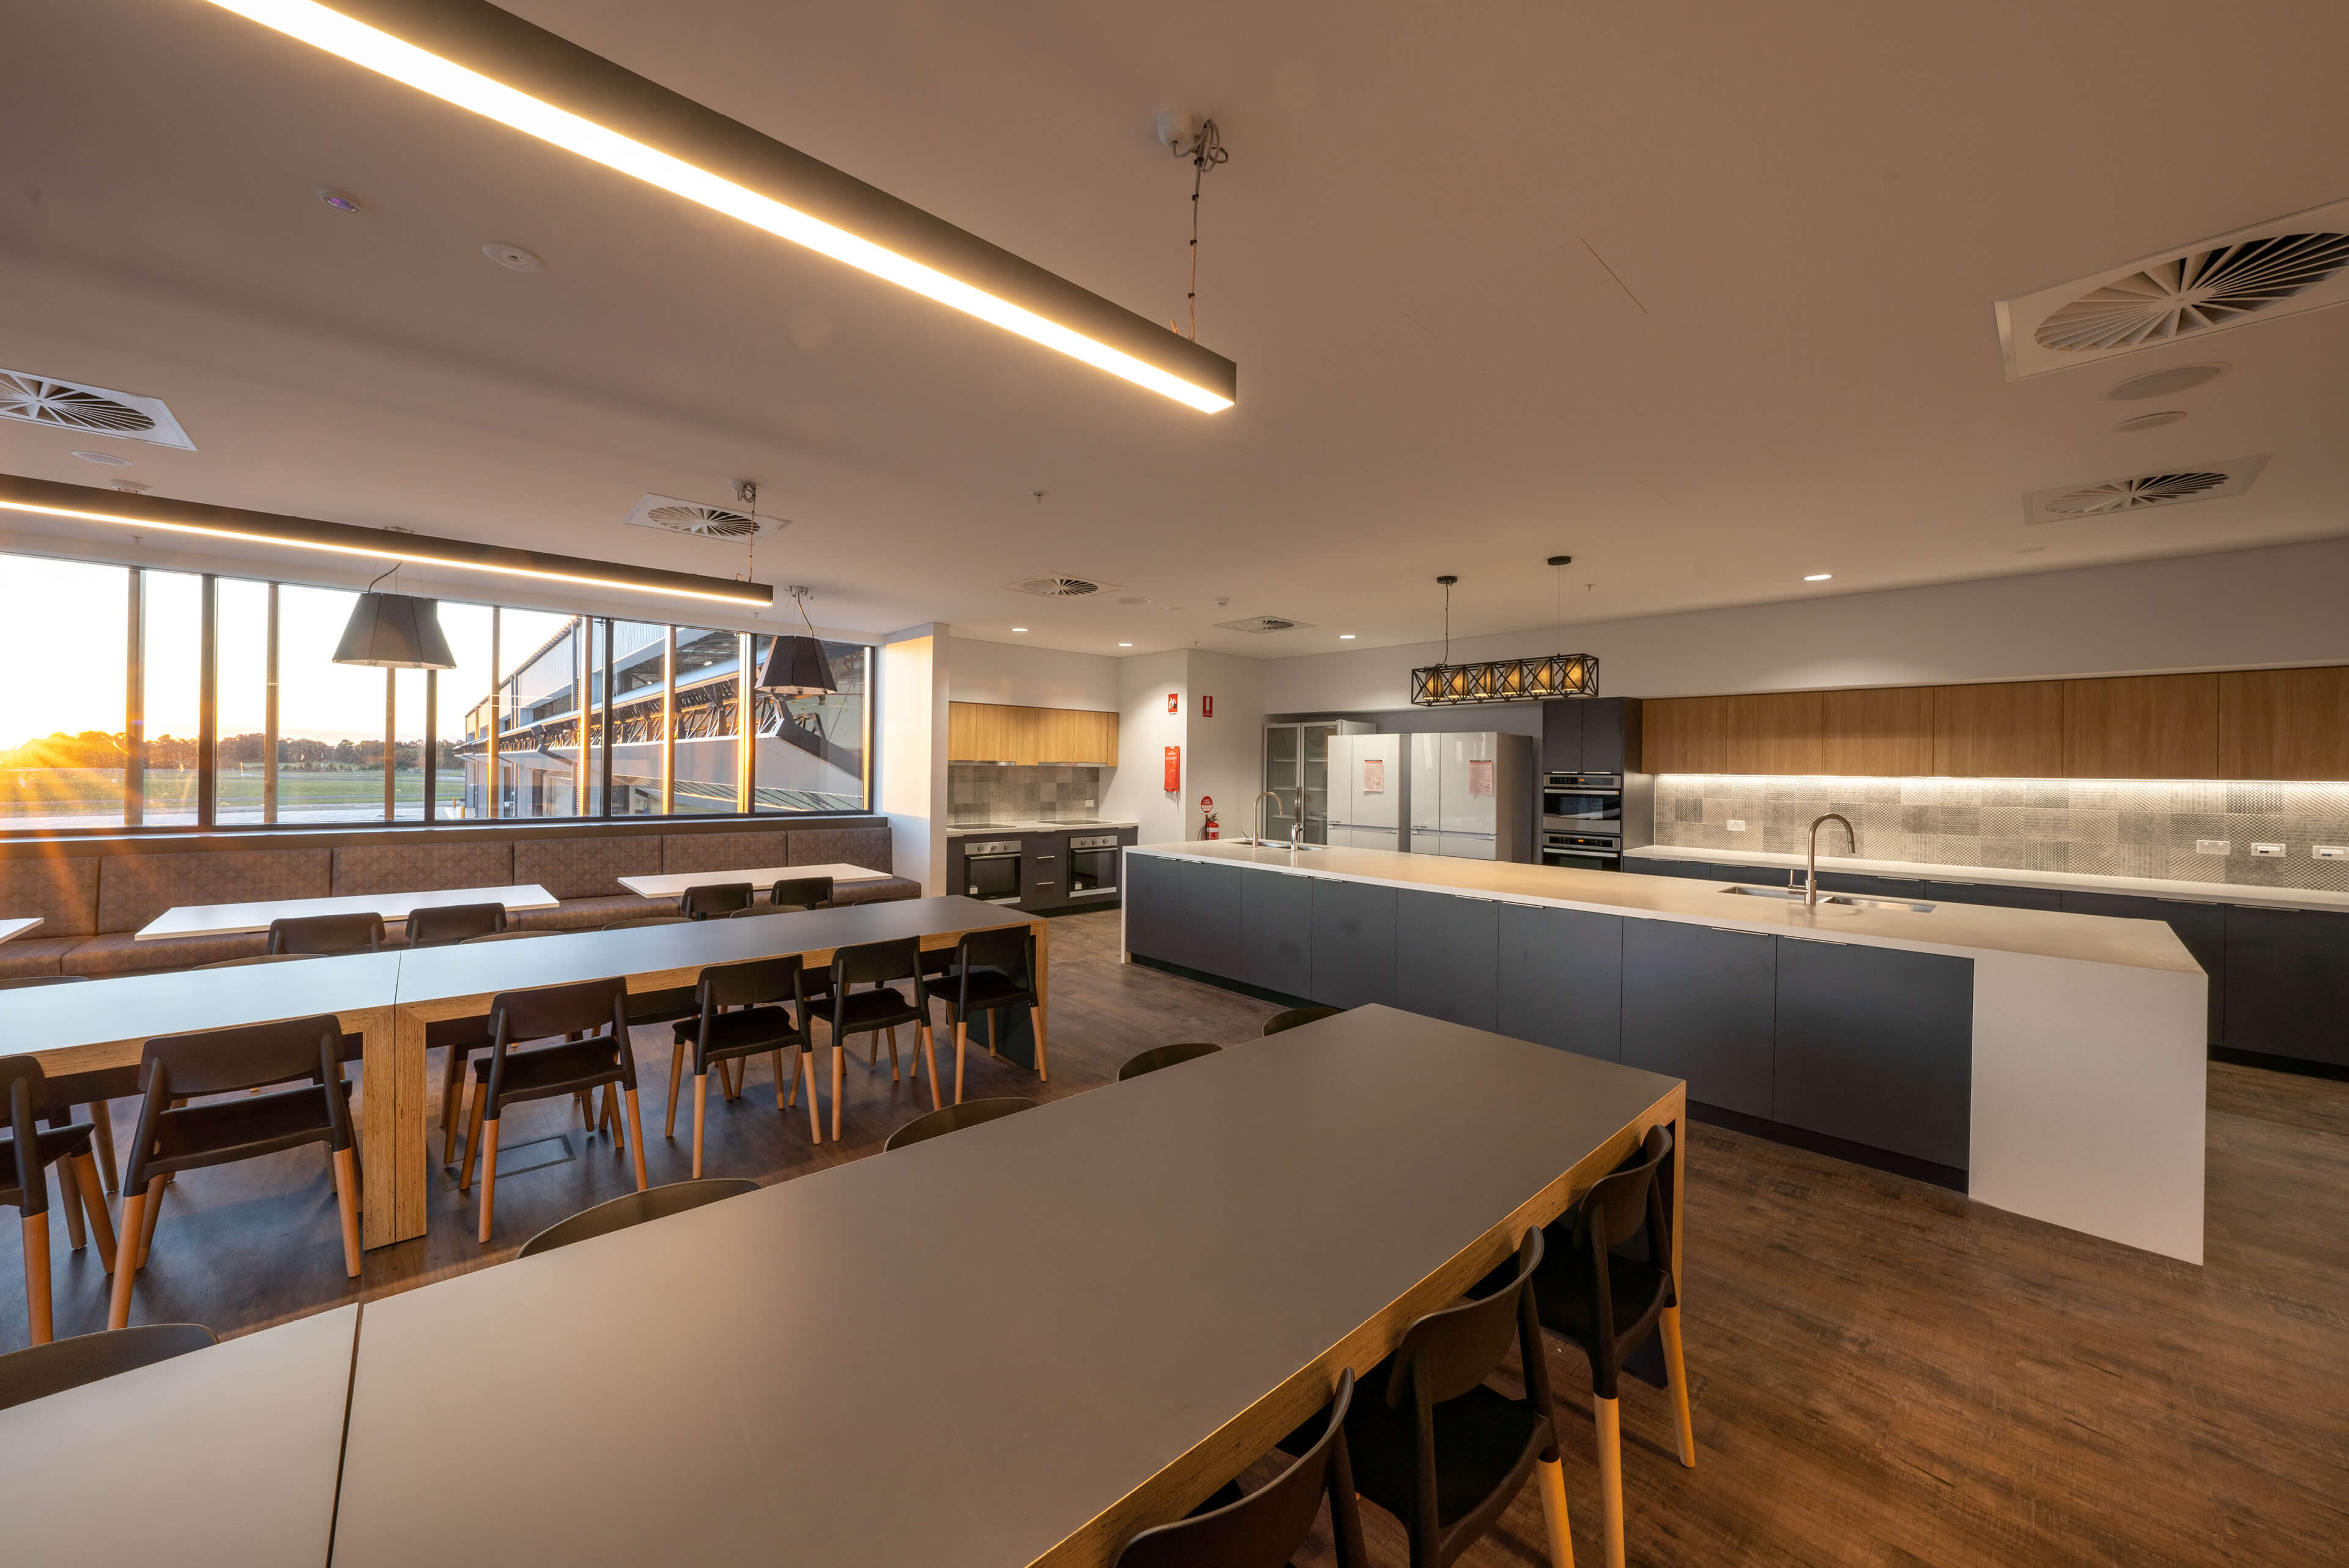 21 interior view of staff and pilot kitchen facilities at polair facility bankstown taylor construction refurbishment and live environments